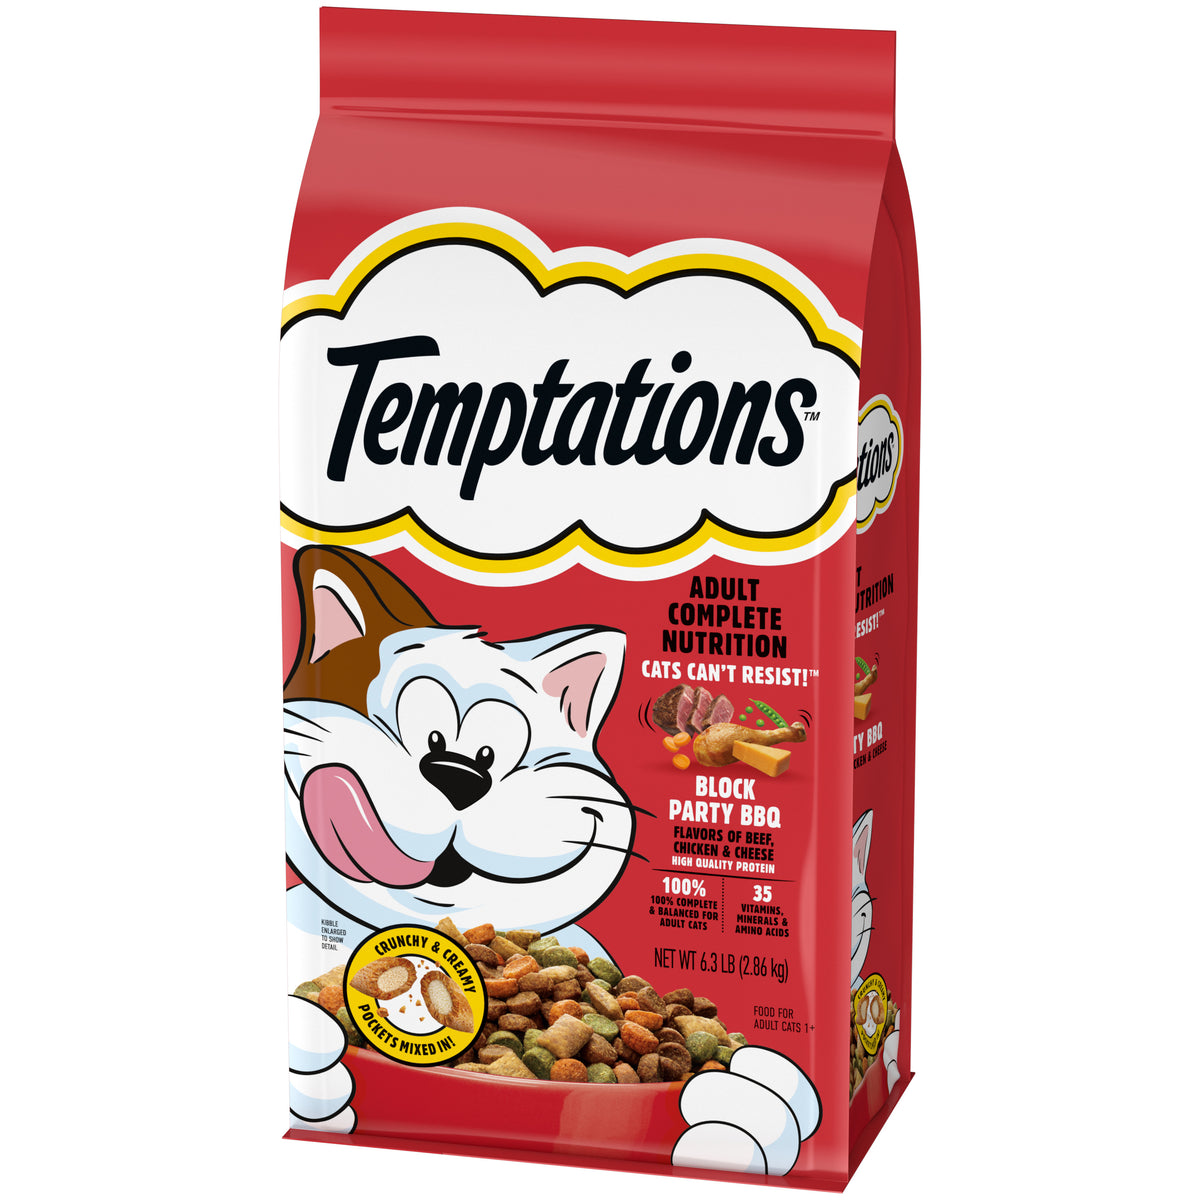 [Temptations][TEMPTATIONS Adult Dry Cat Food, Block Party BBQ Flavor, 6.3 lb. Bag][Image Center Right (3/4 Angle)]